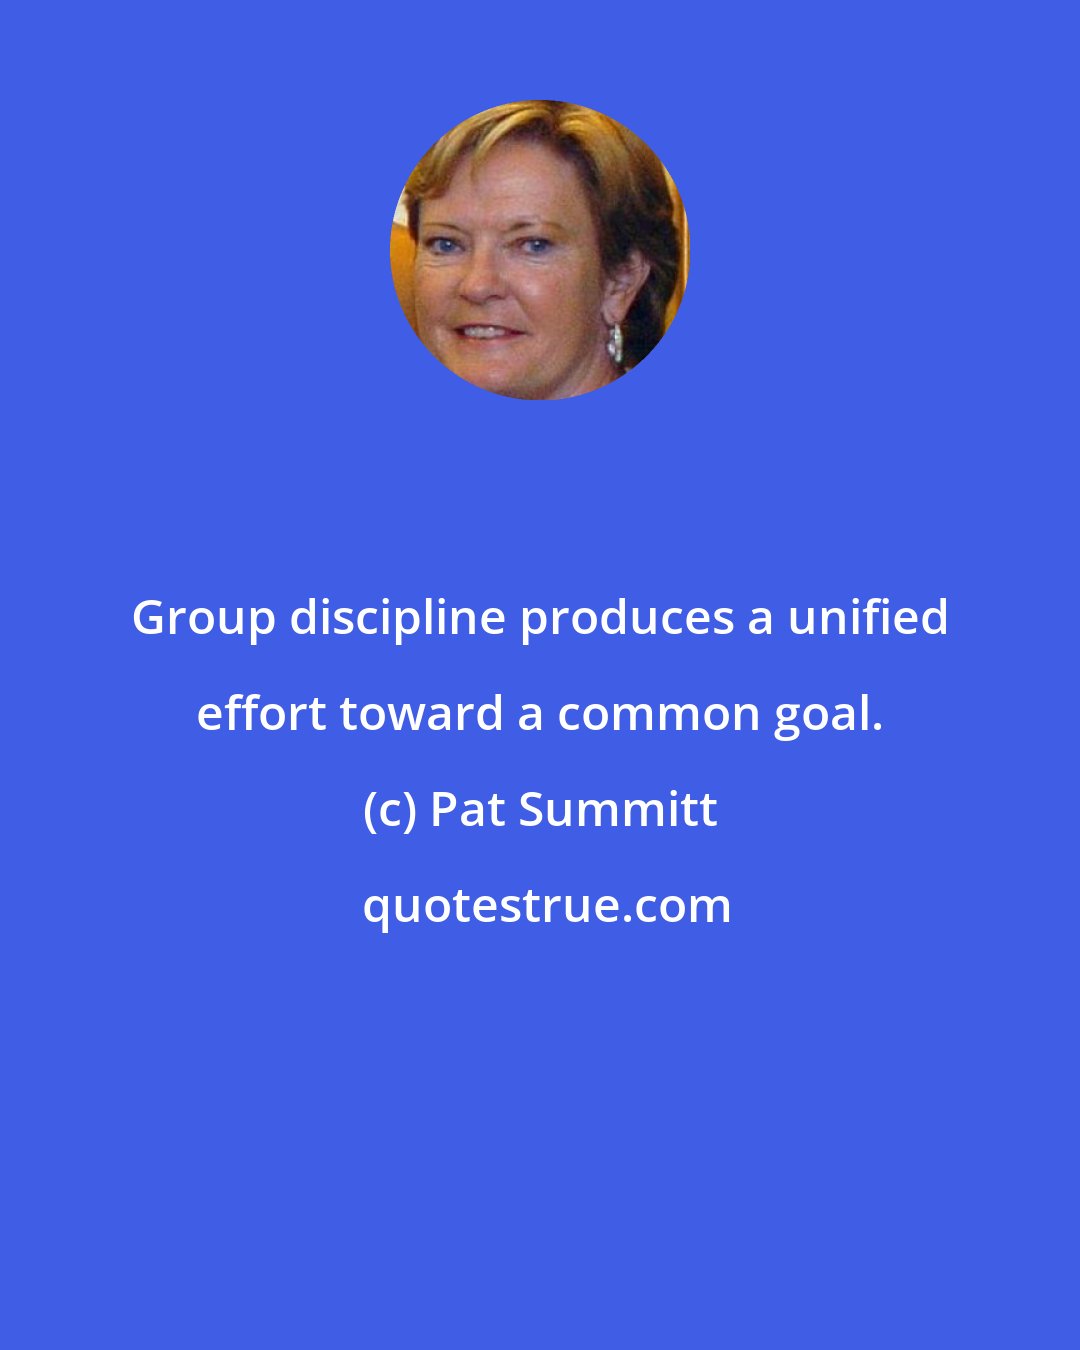 Pat Summitt: Group discipline produces a unified effort toward a common goal.